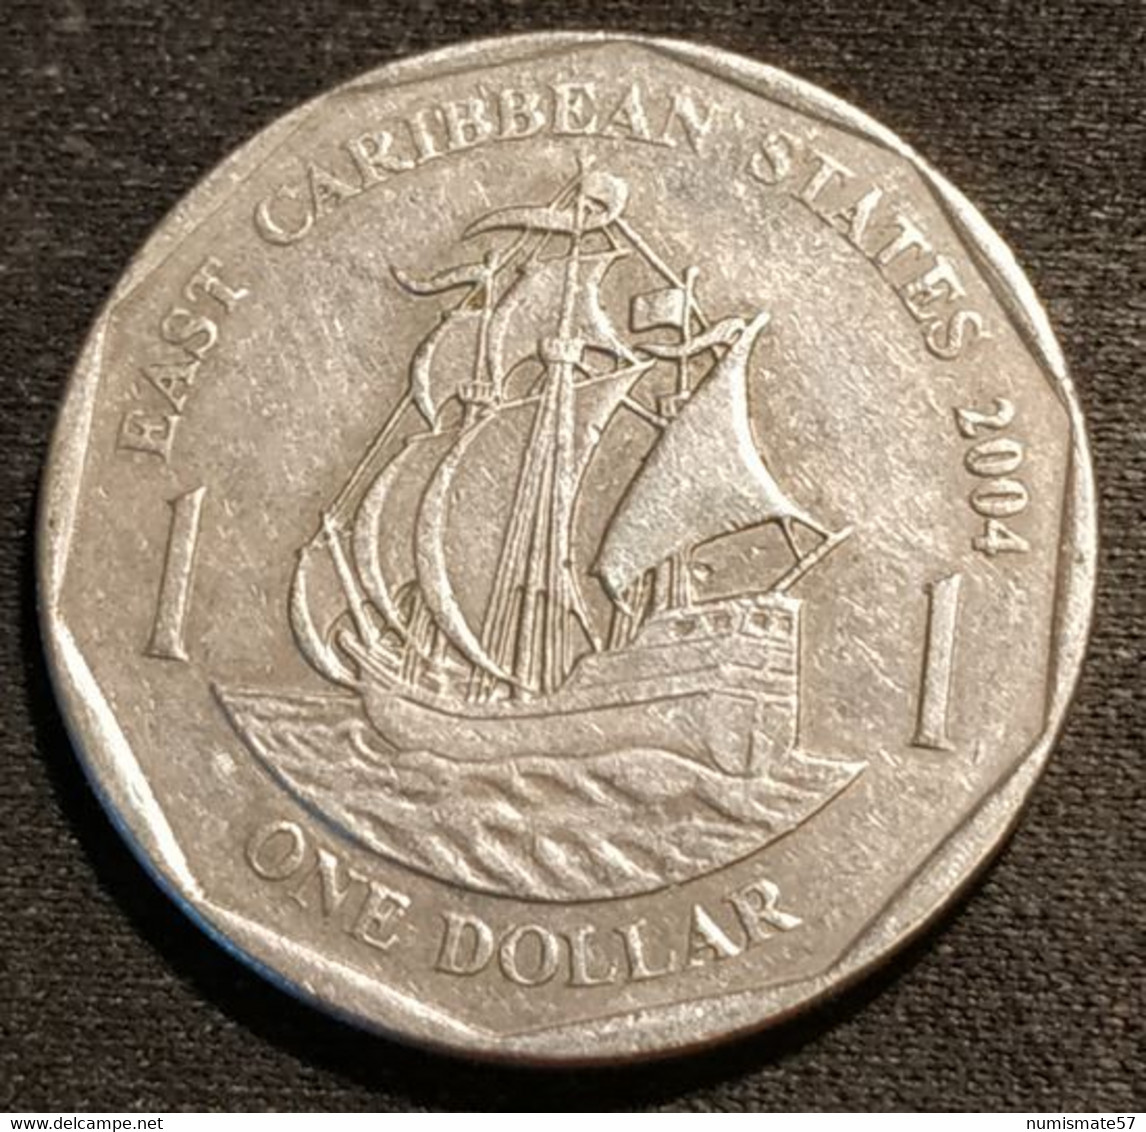 EAST CARIBBEAN STATES - 1 DOLLAR 2004 - Elizabeth II - 4e Effigie - KM 39 - ( Etats De La Caraïbe Orientale ) - Caraïbes Orientales (Etats Des)